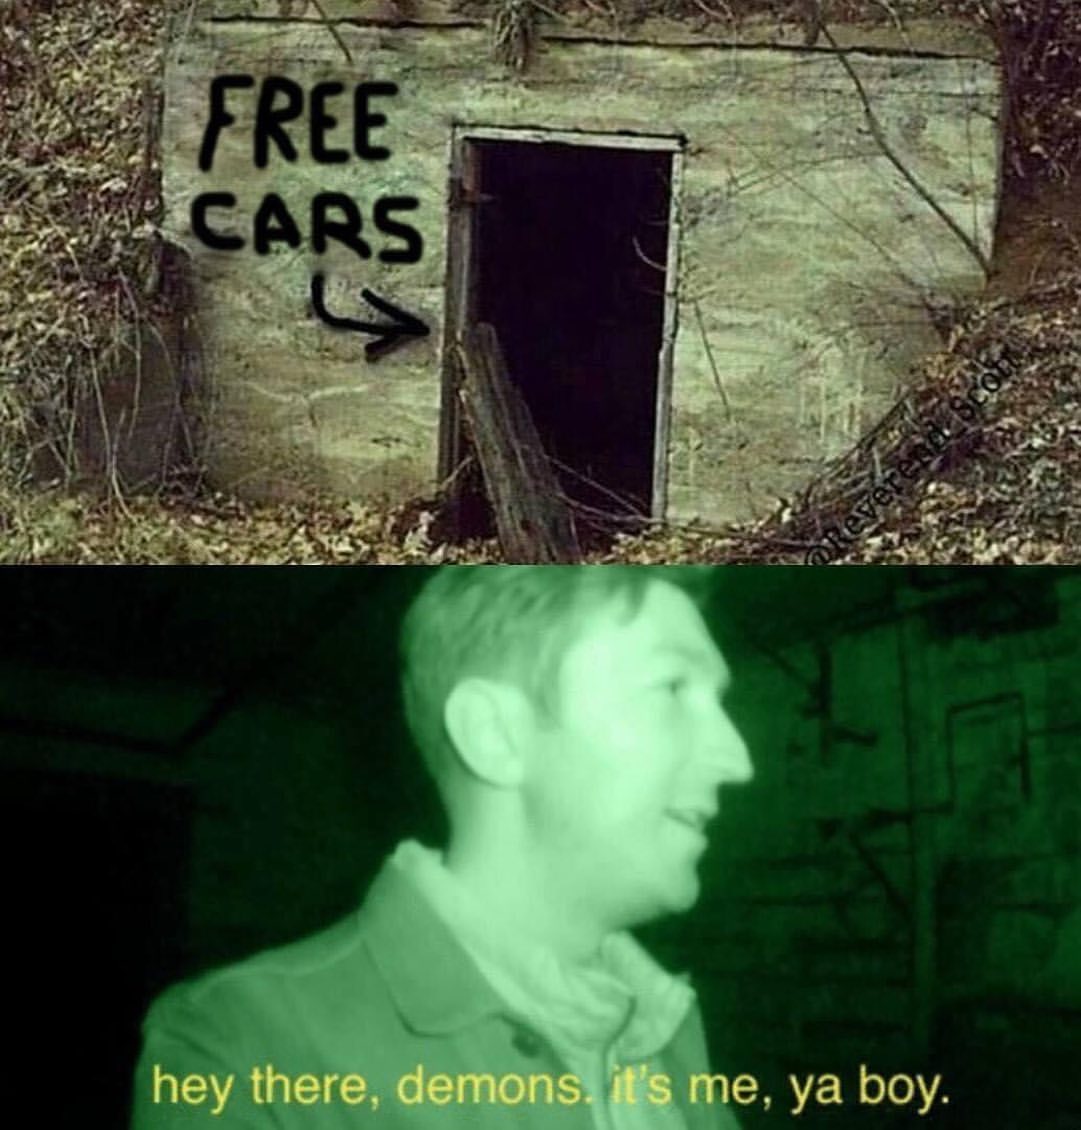 Free cars. Hey there, demons. It's me, ya boy.